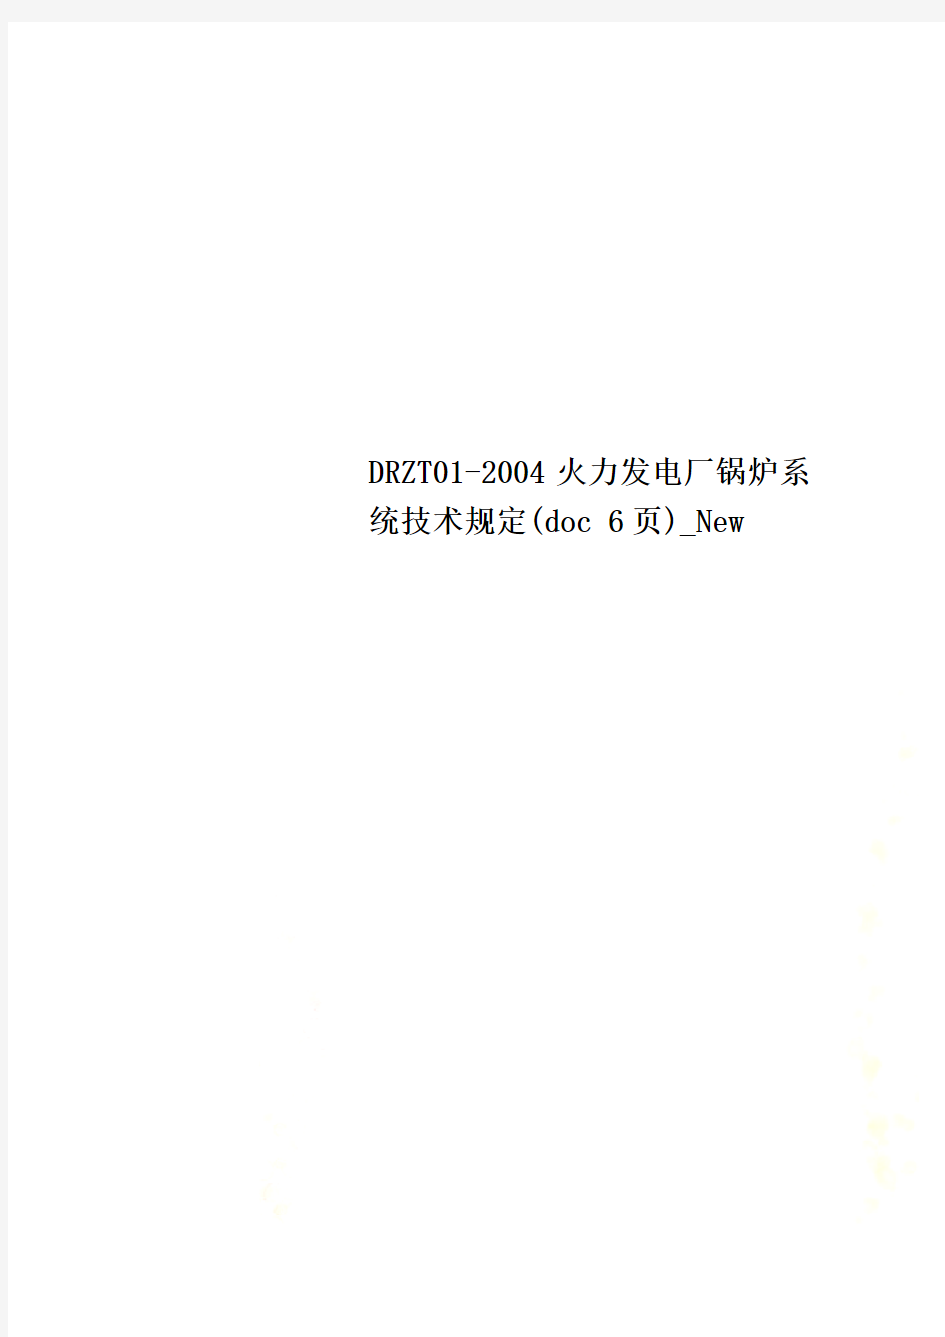 DRZT01-2004火力发电厂锅炉系统技术规定(doc 6页)